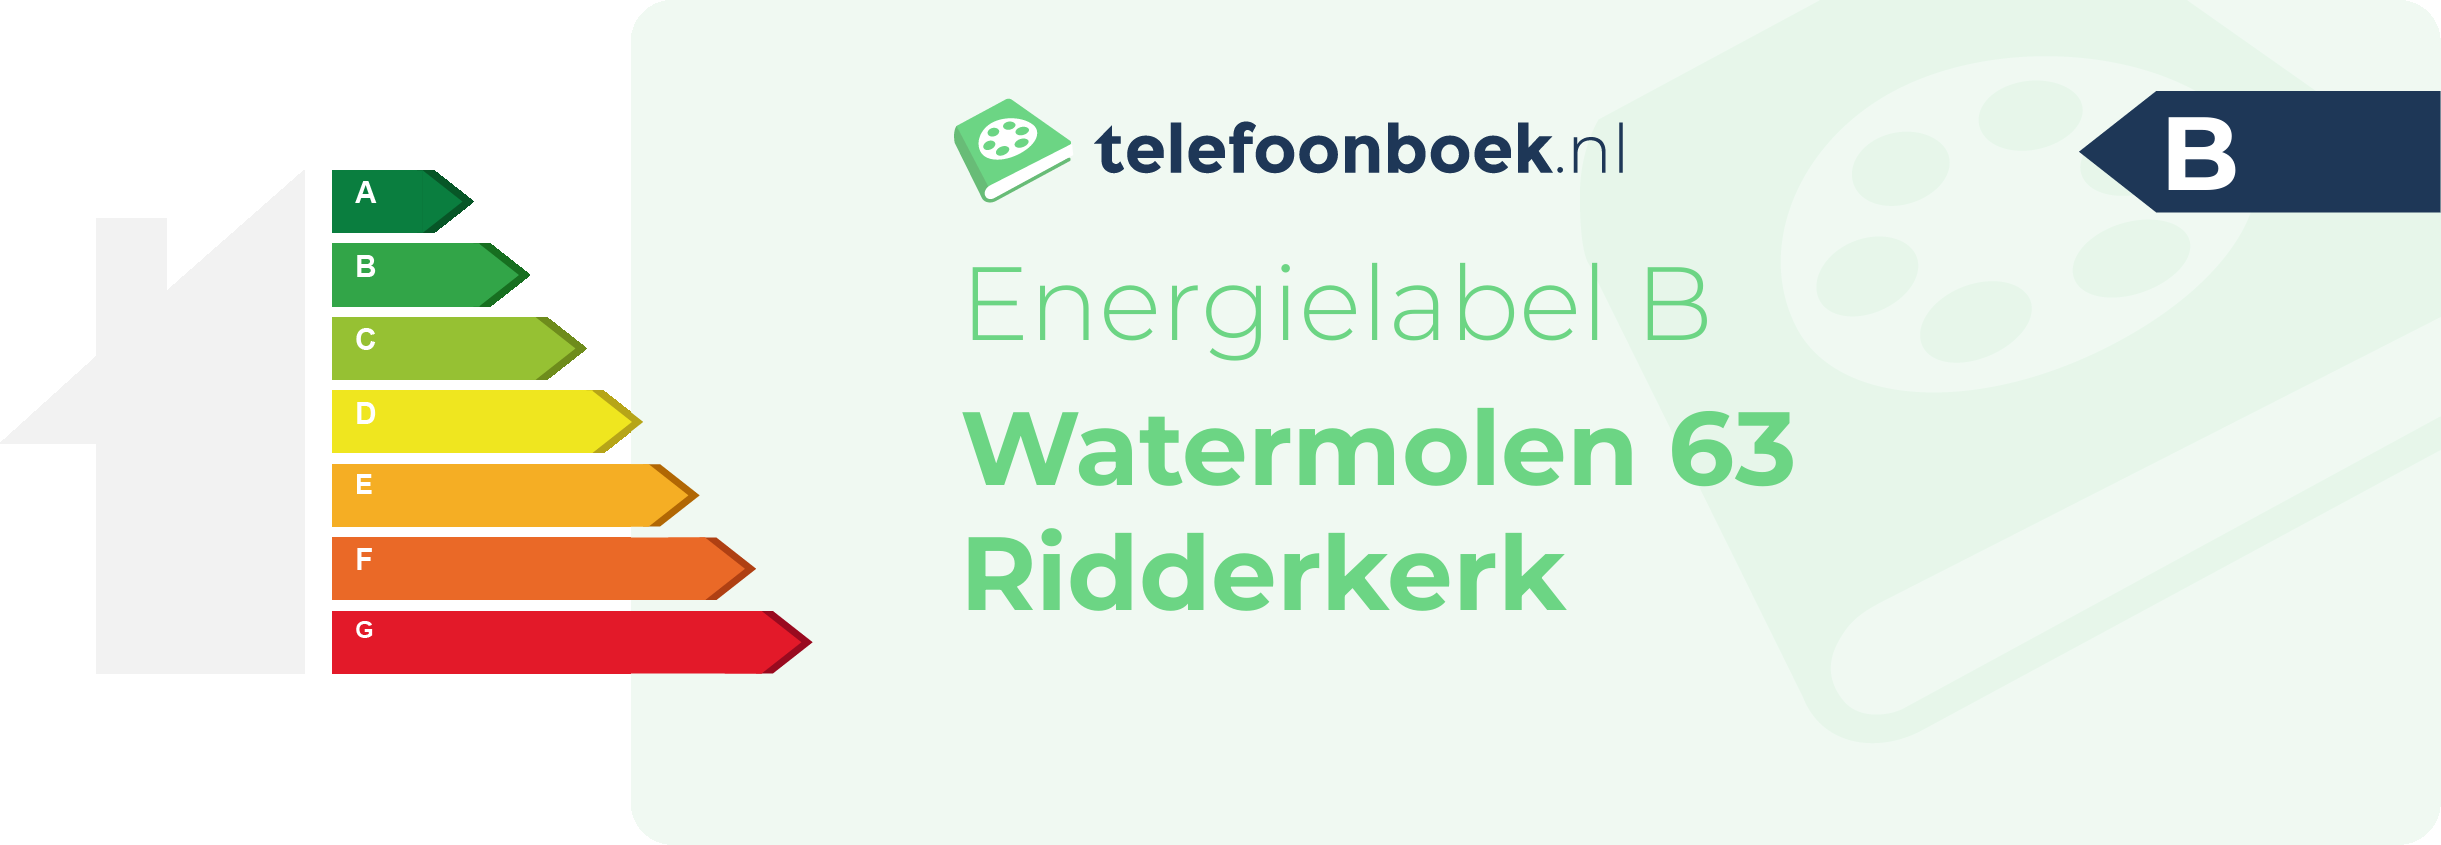 Energielabel Watermolen 63 Ridderkerk